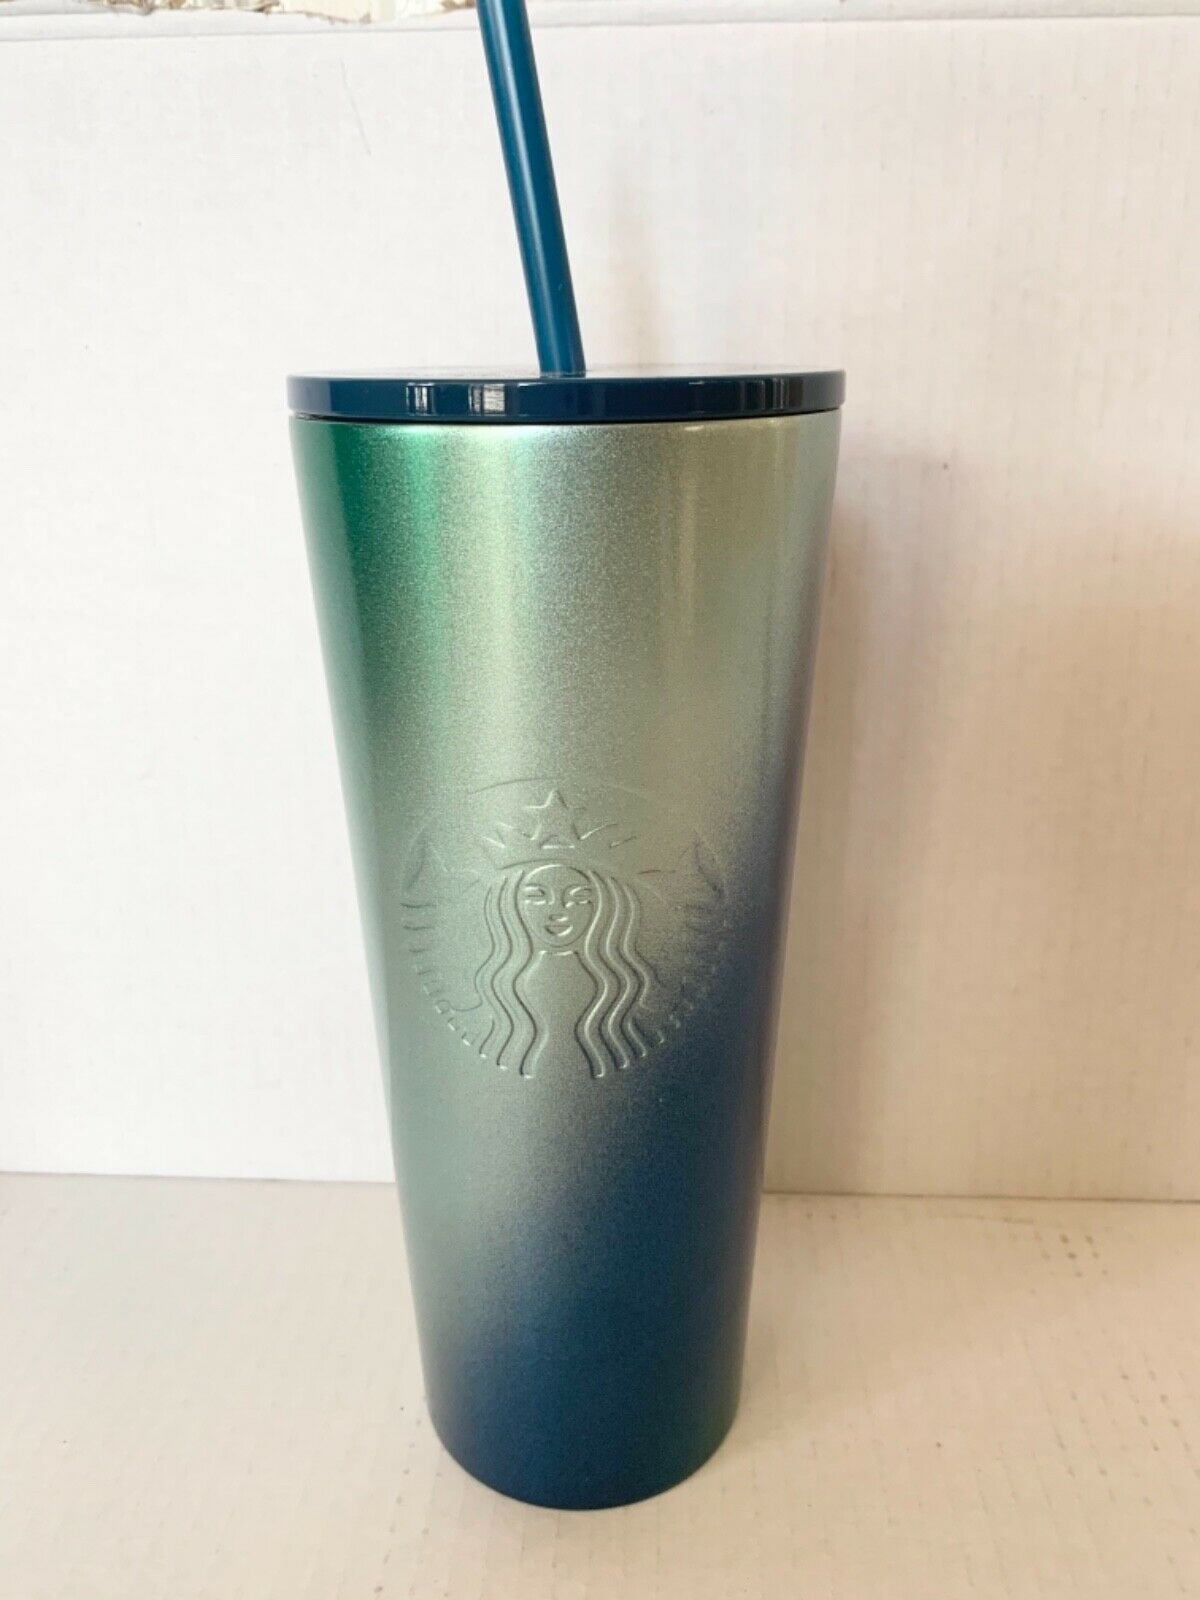 NEW 2018 Starbucks Holiday Silver Sparkle Bling Hot Cup Tumbler Mug Grande 16oz 